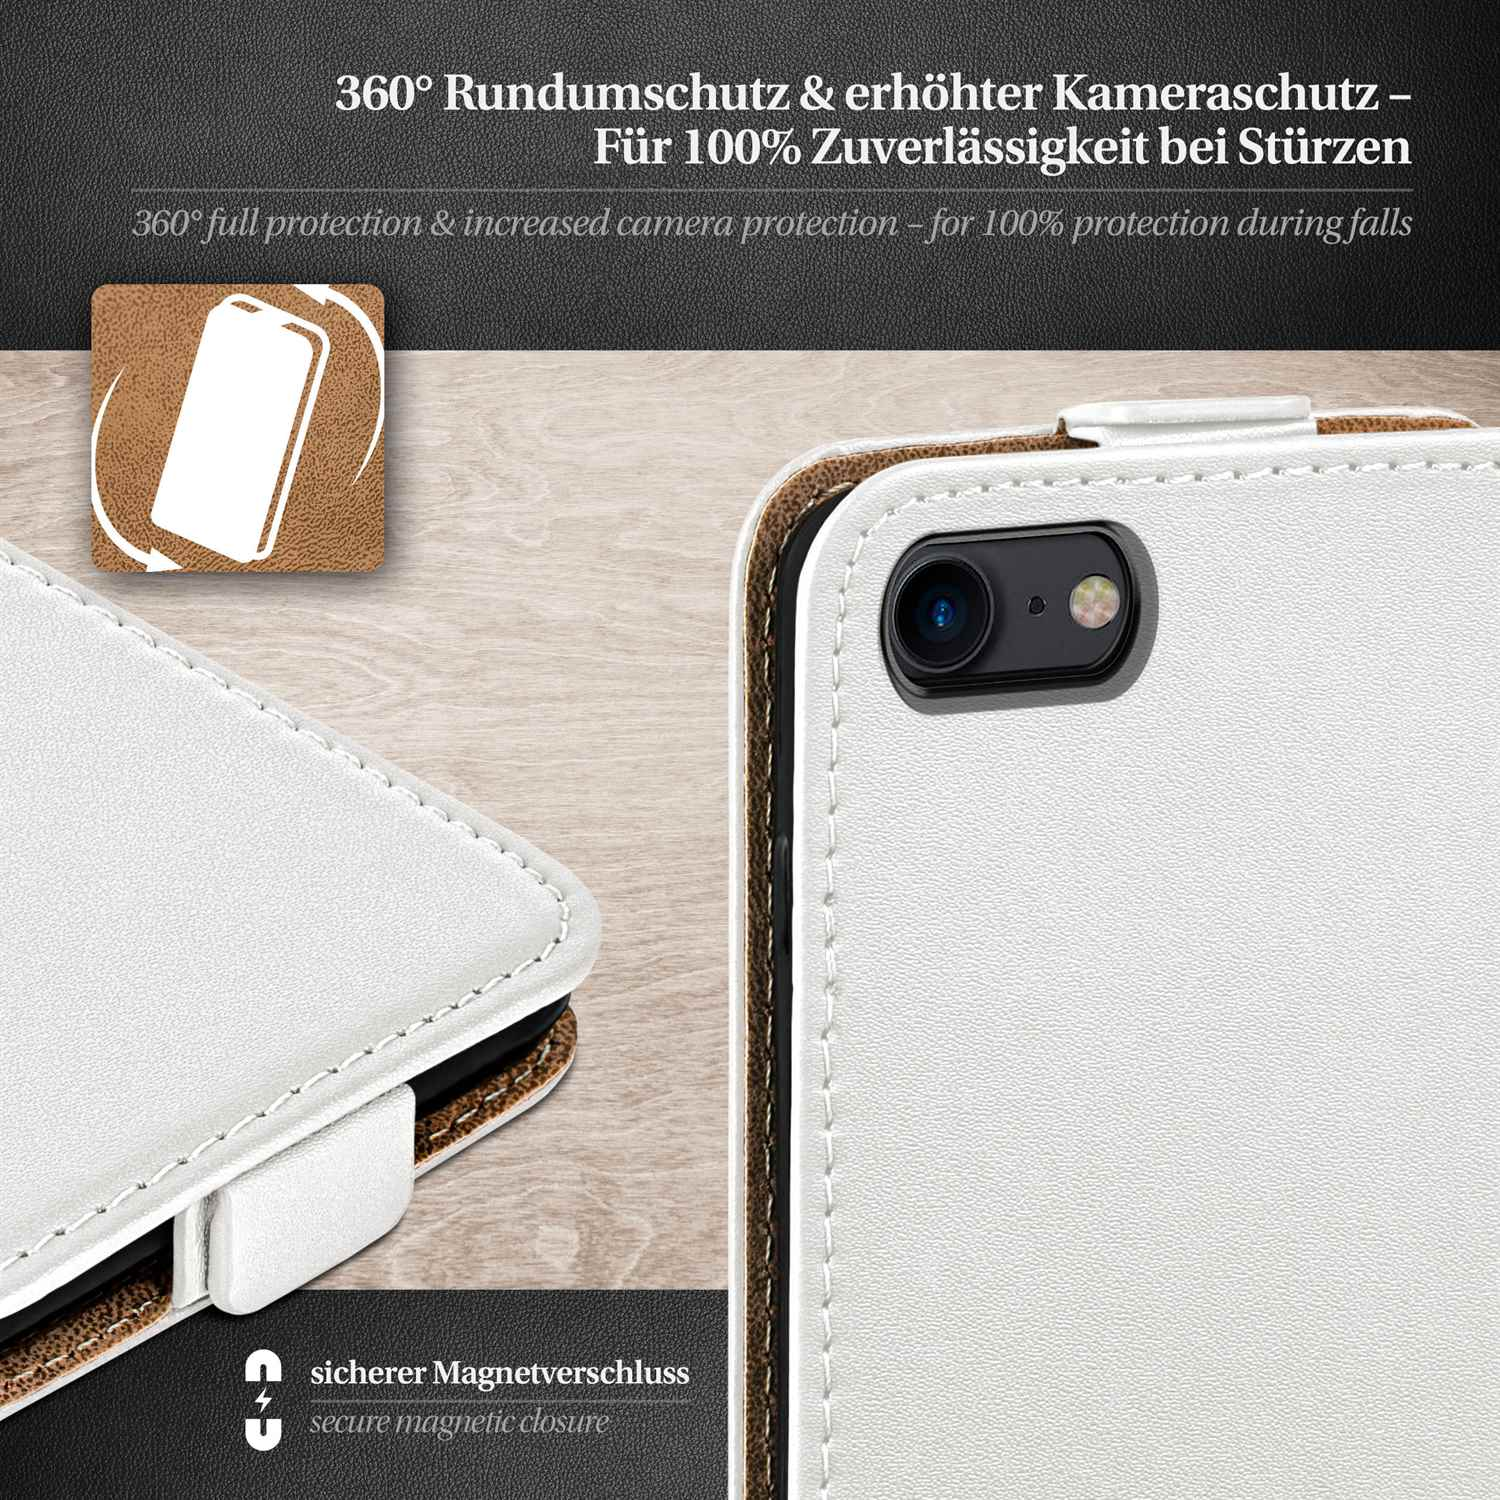 MOEX Pearl-White iPhone Flip Cover, 8, Flip Apple, Case,